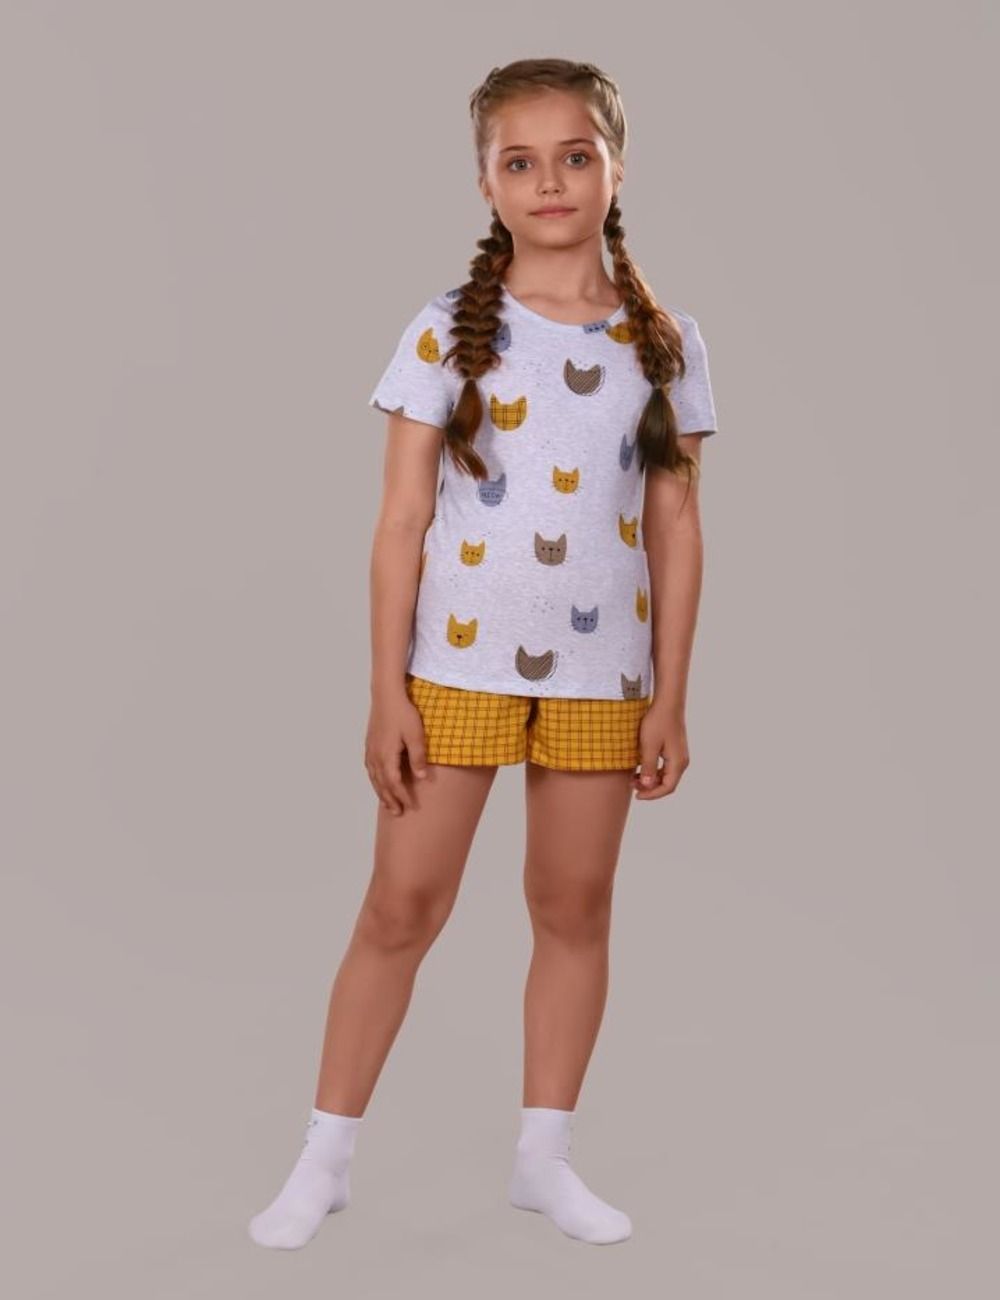 Пижама для девочки Кошки арт.ПД-009-024 - серый меланж/горчичный